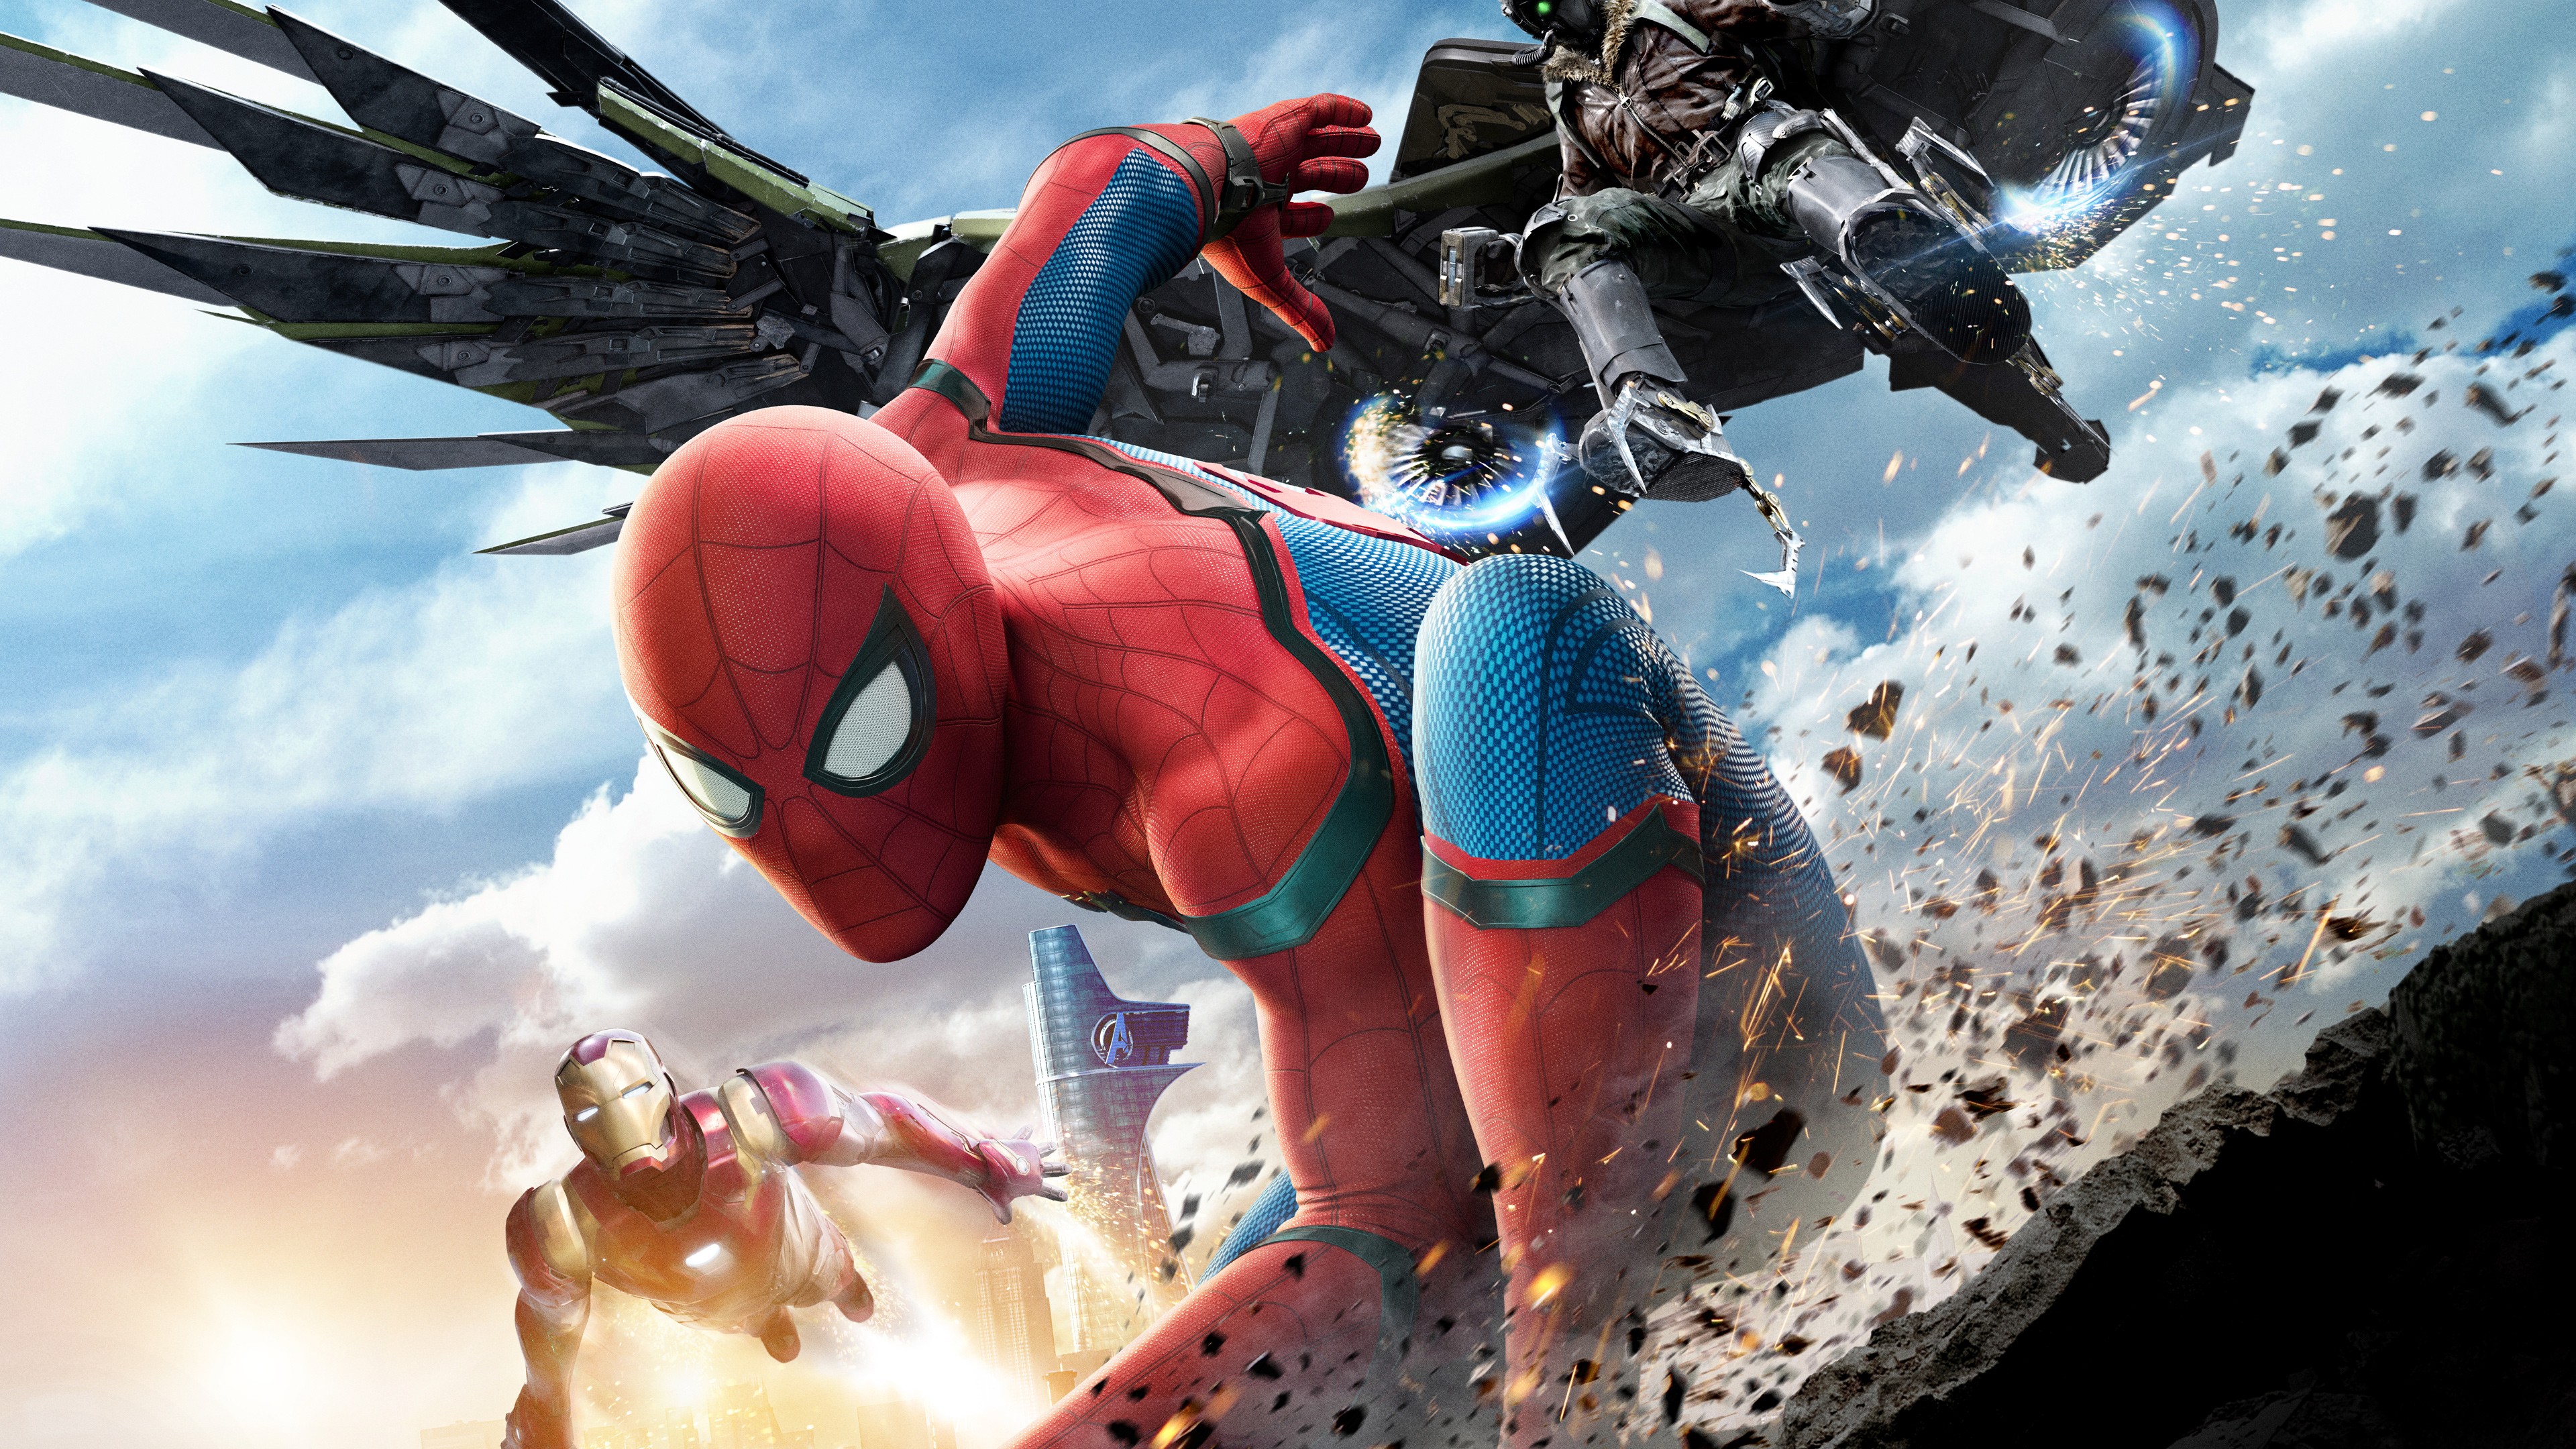 Wallpaper Spider Man: Homecoming, 4k, 5k, 8k, Movies